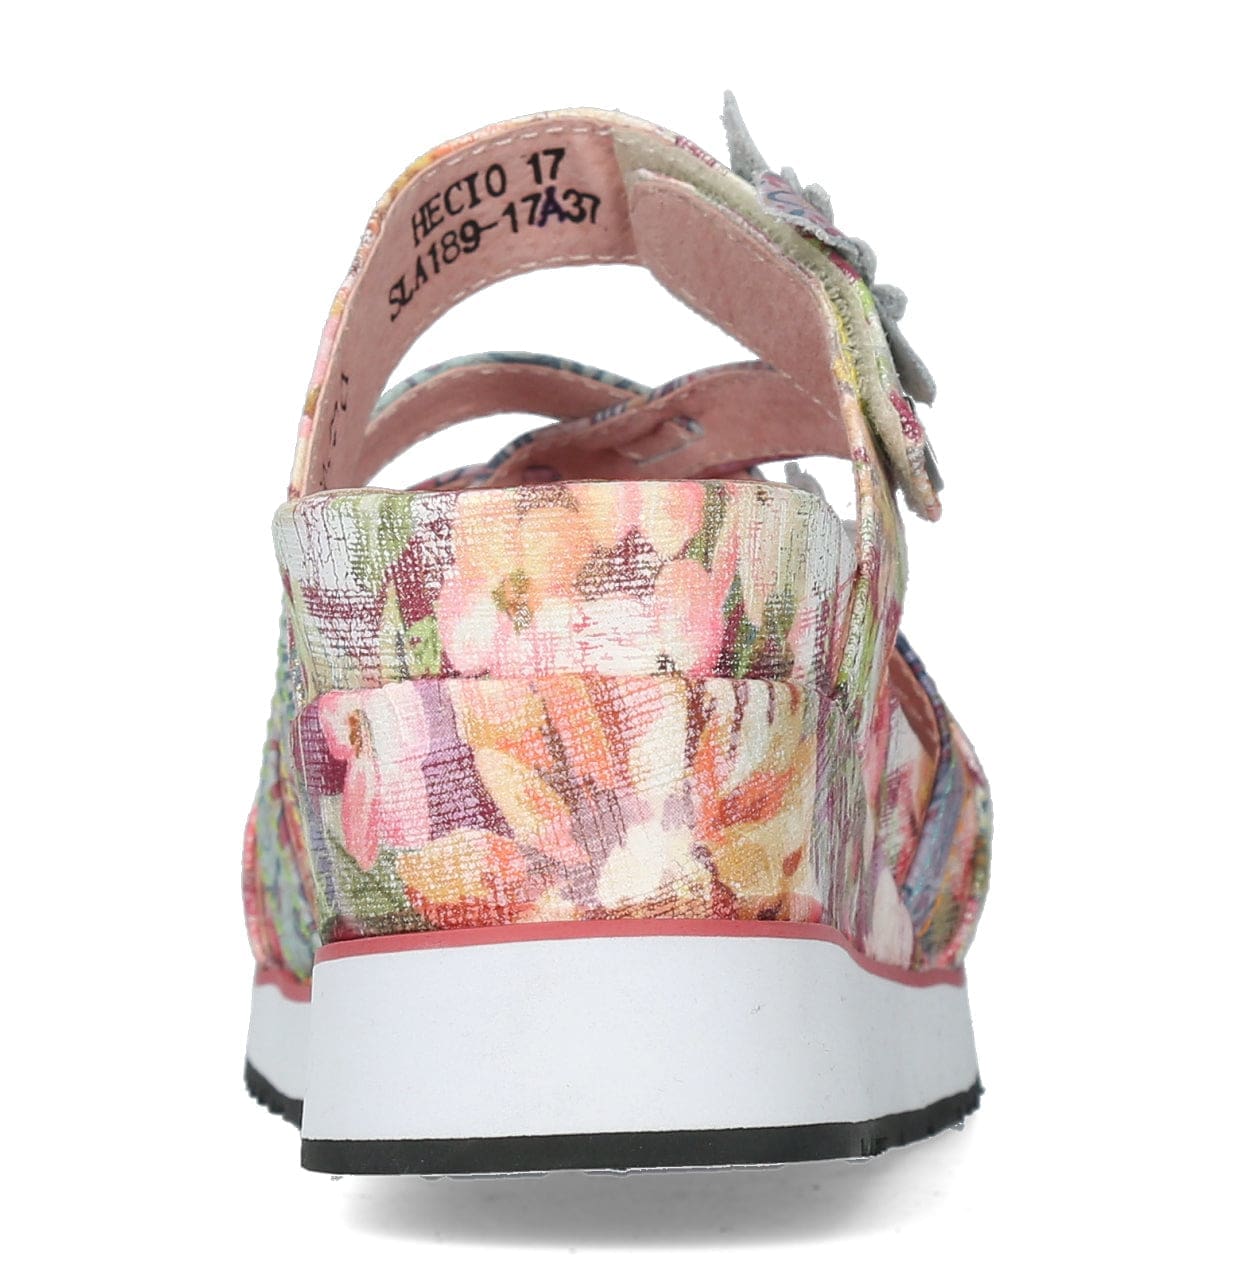 Schuhe HECIO 17 Blume - Sandale